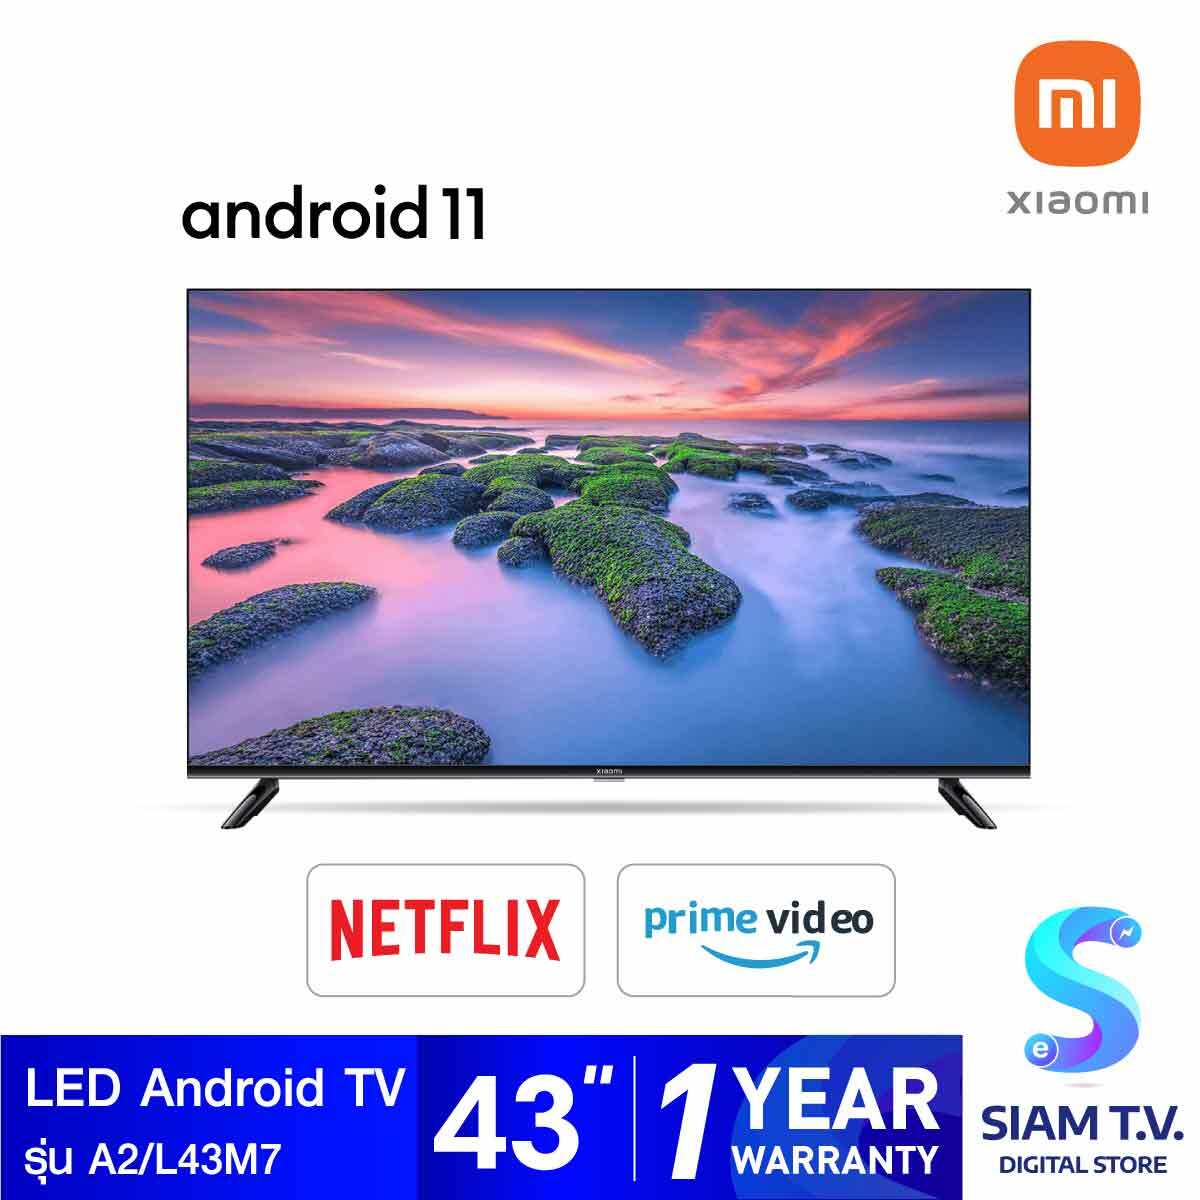 XIAOMI LED Android TV รุ่น A2/L43M7 Android 11 ขนาด 43 นิ้ว โดย สยามทีวี by Siam T.V.